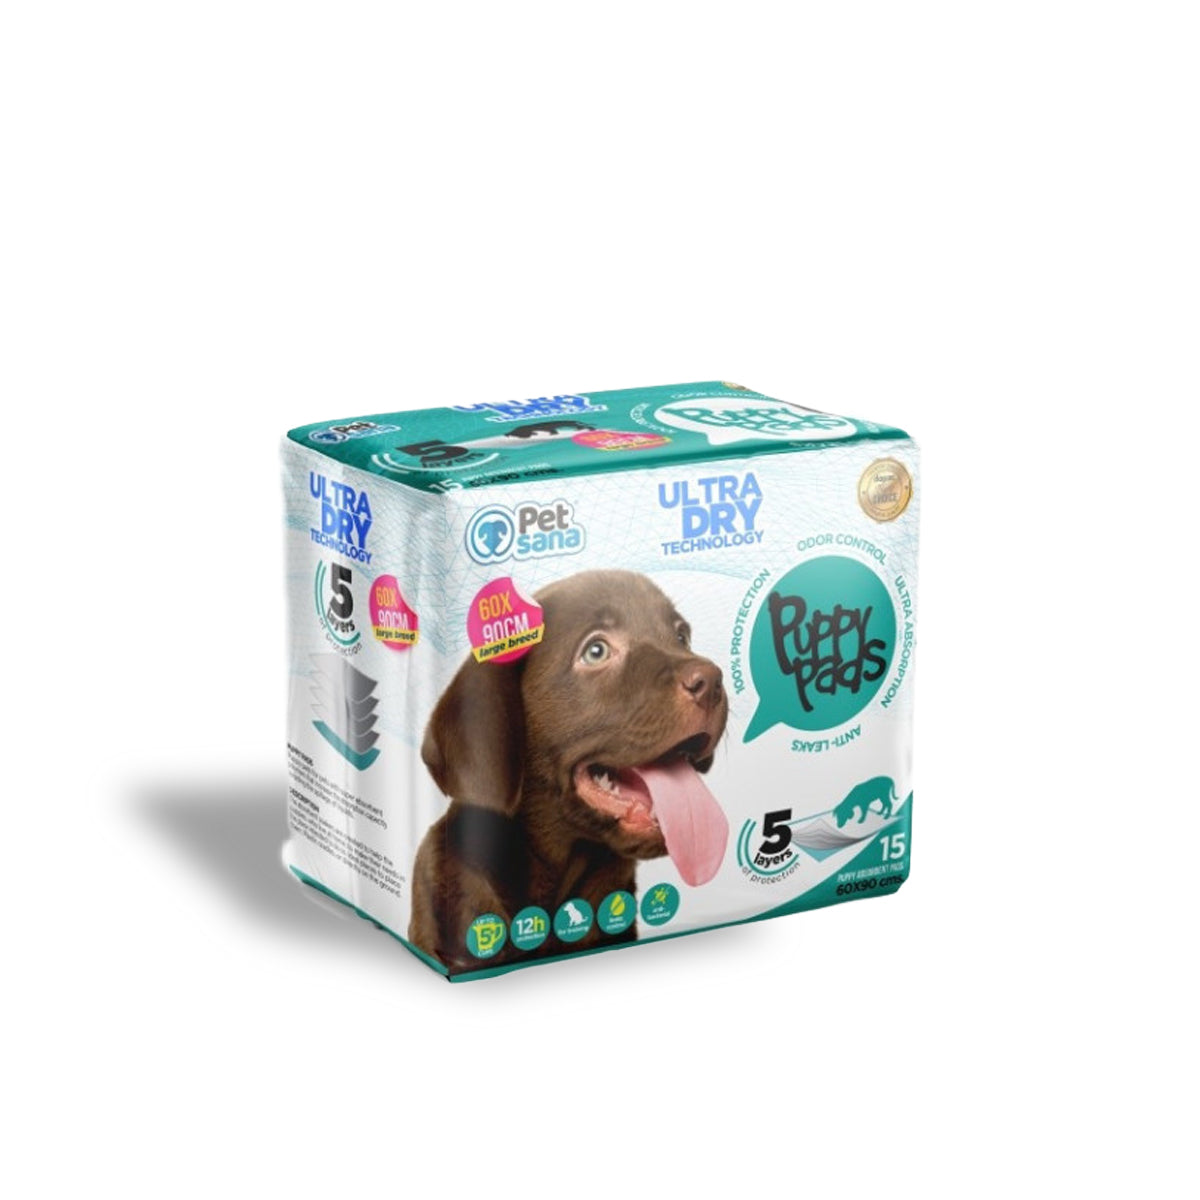 Petsana empapadores PuppyPads para cachorros – Paraíso Mascota